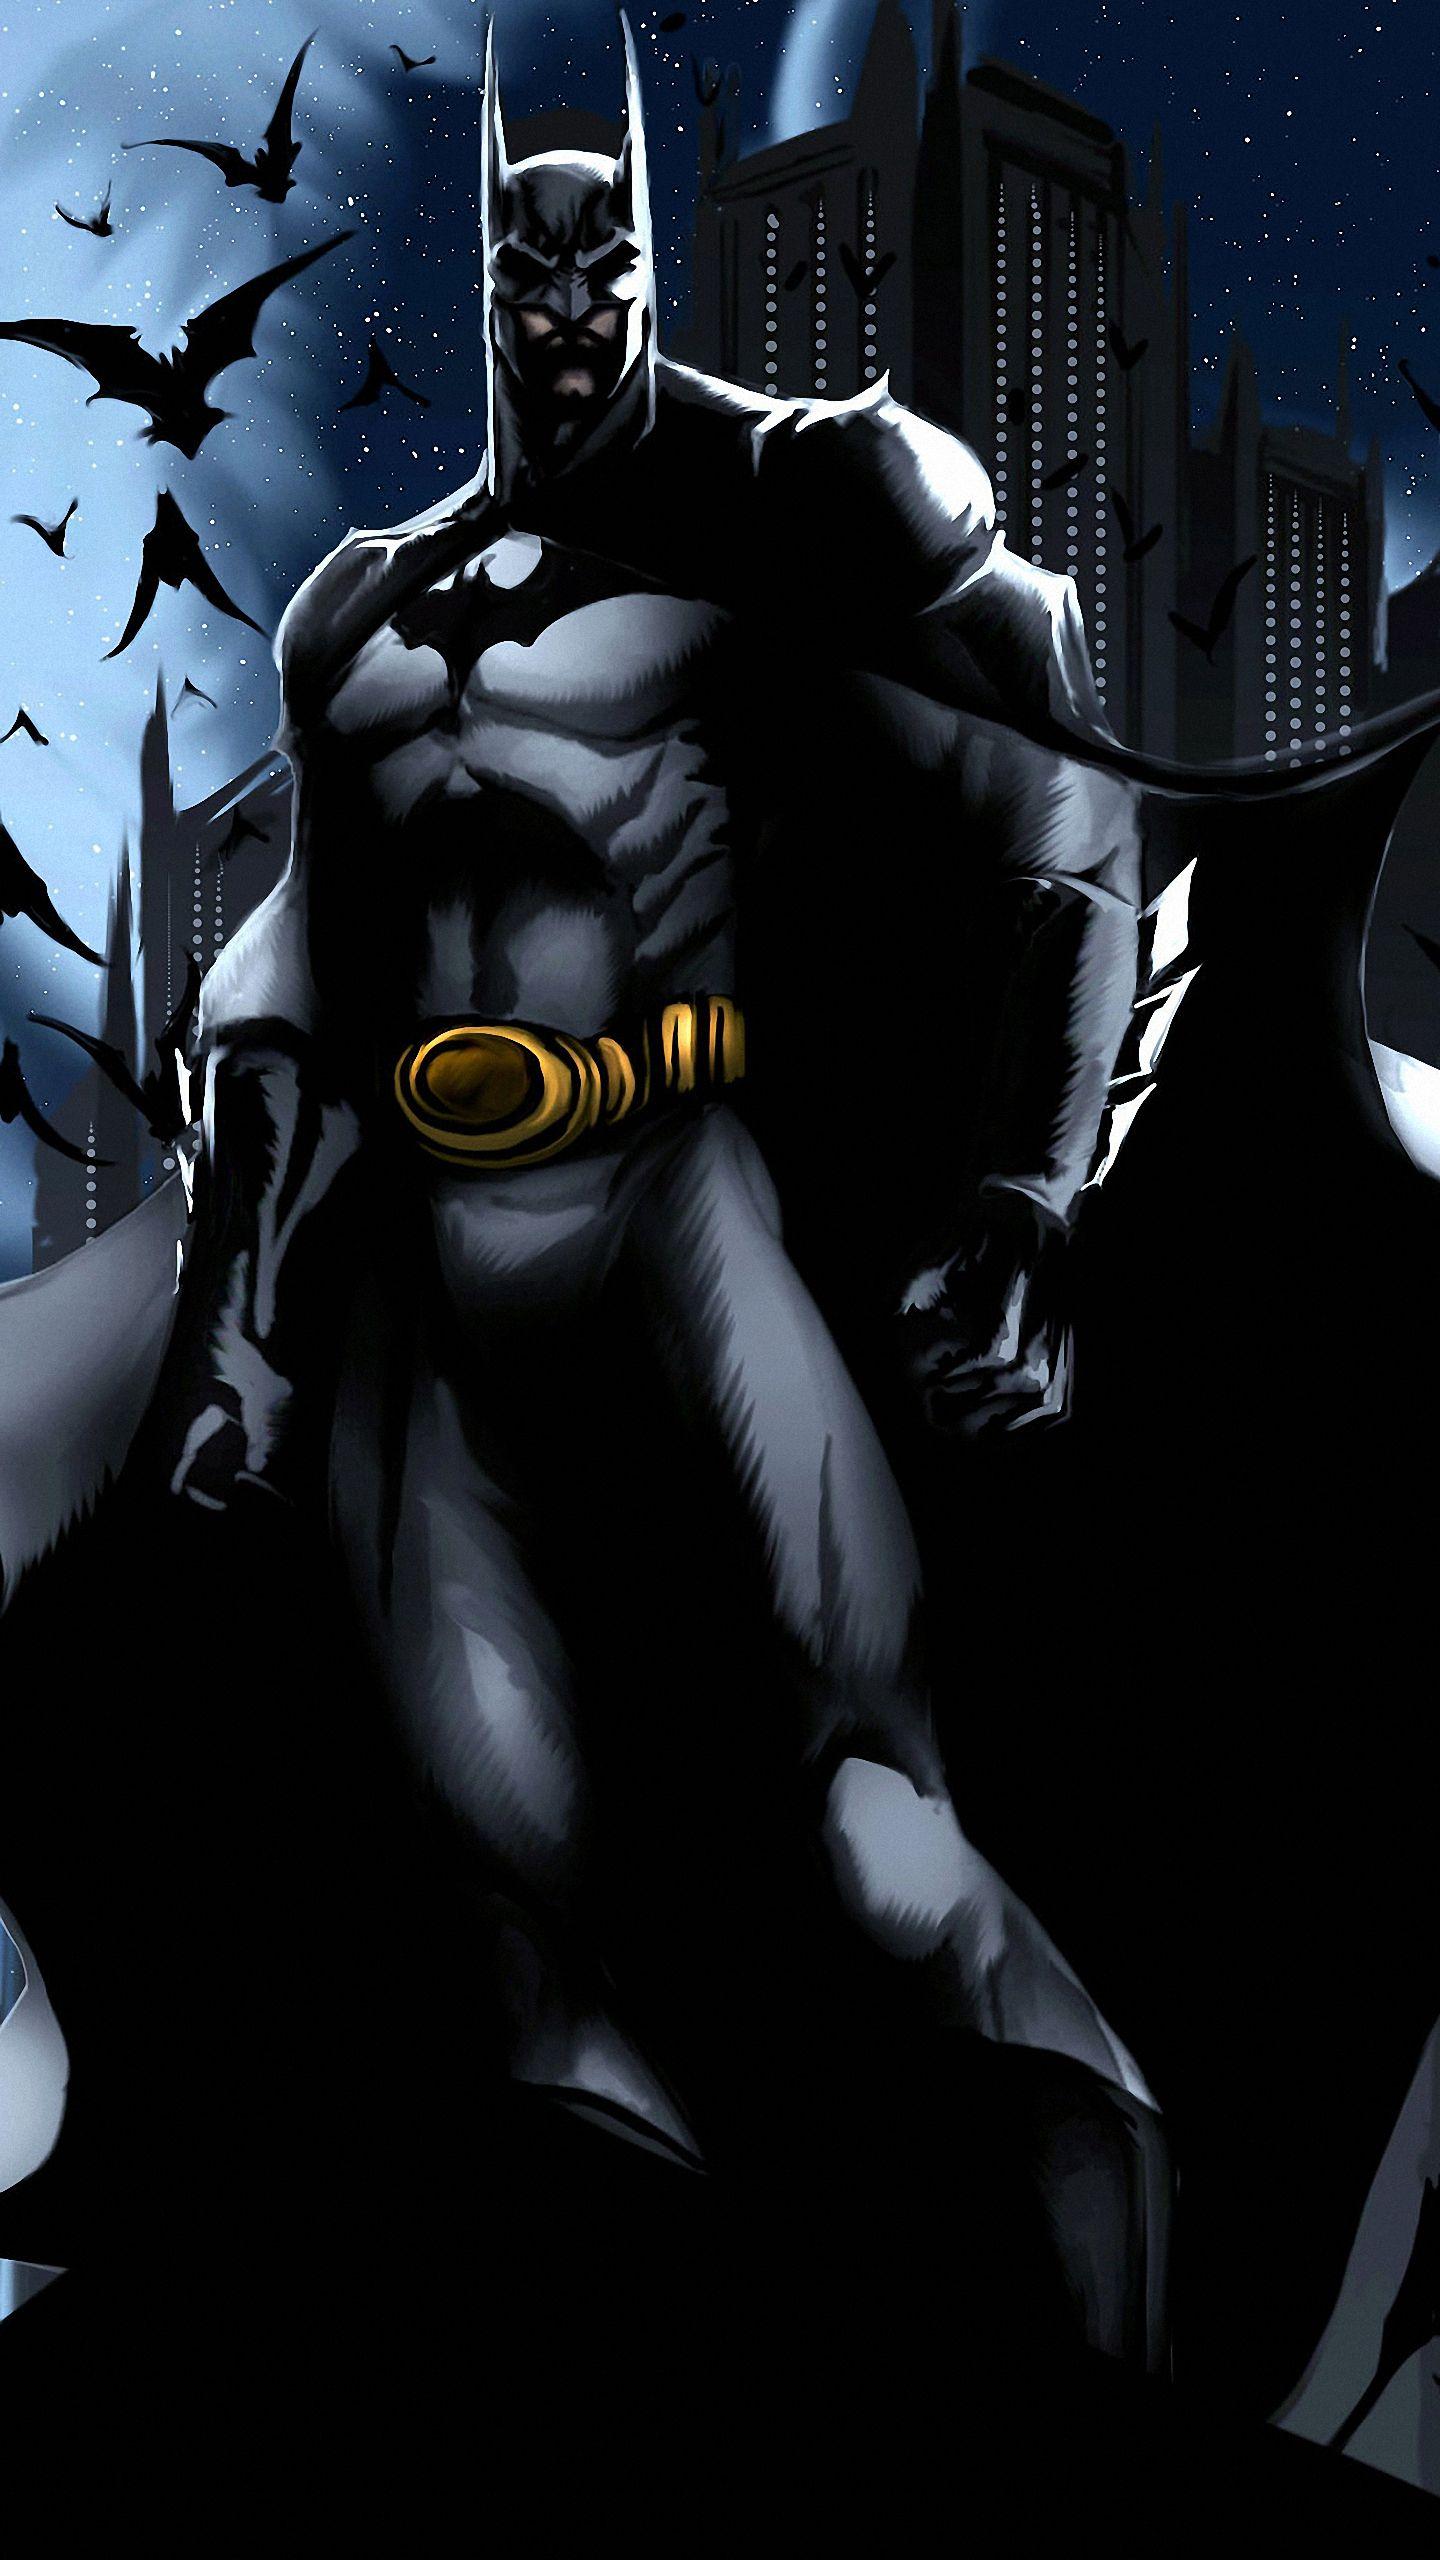 x13 batman phone wallpapers. Thumbnail: The Dark Knight by Abraão